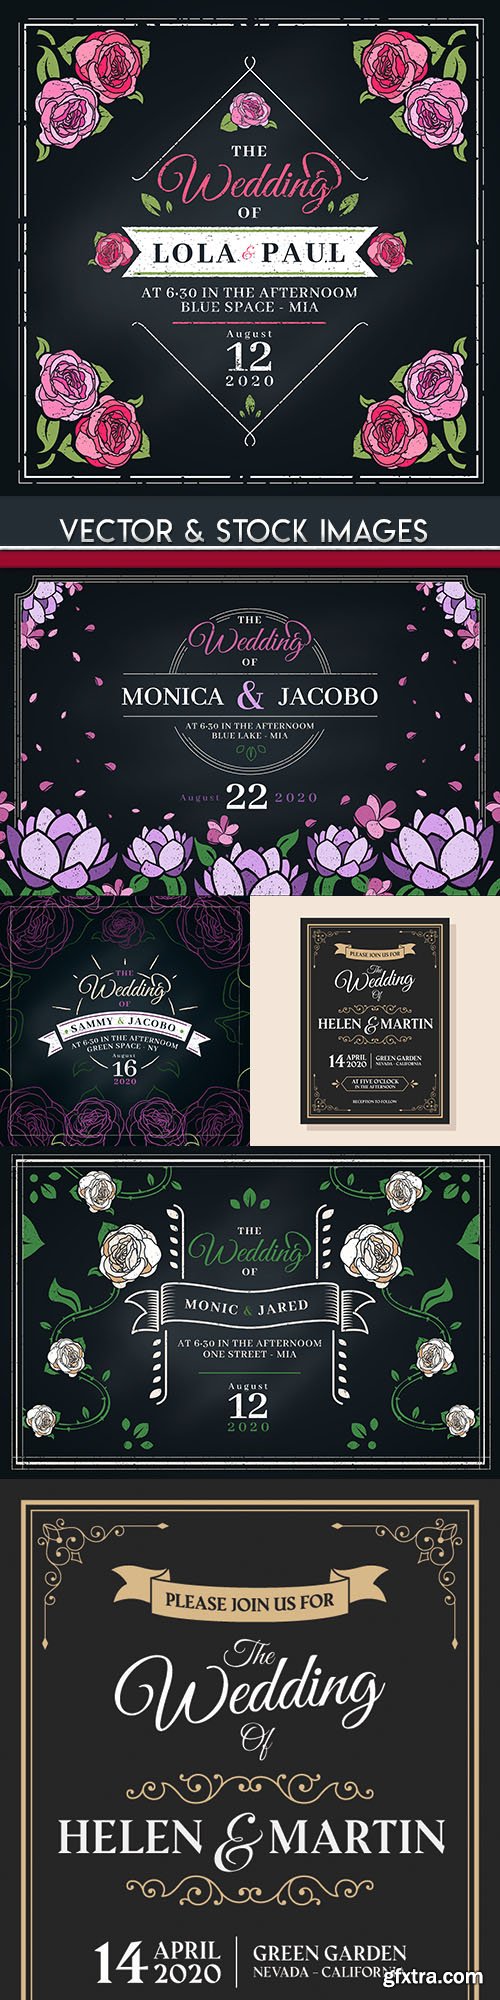 Wedding invitation and decorative design elements 2